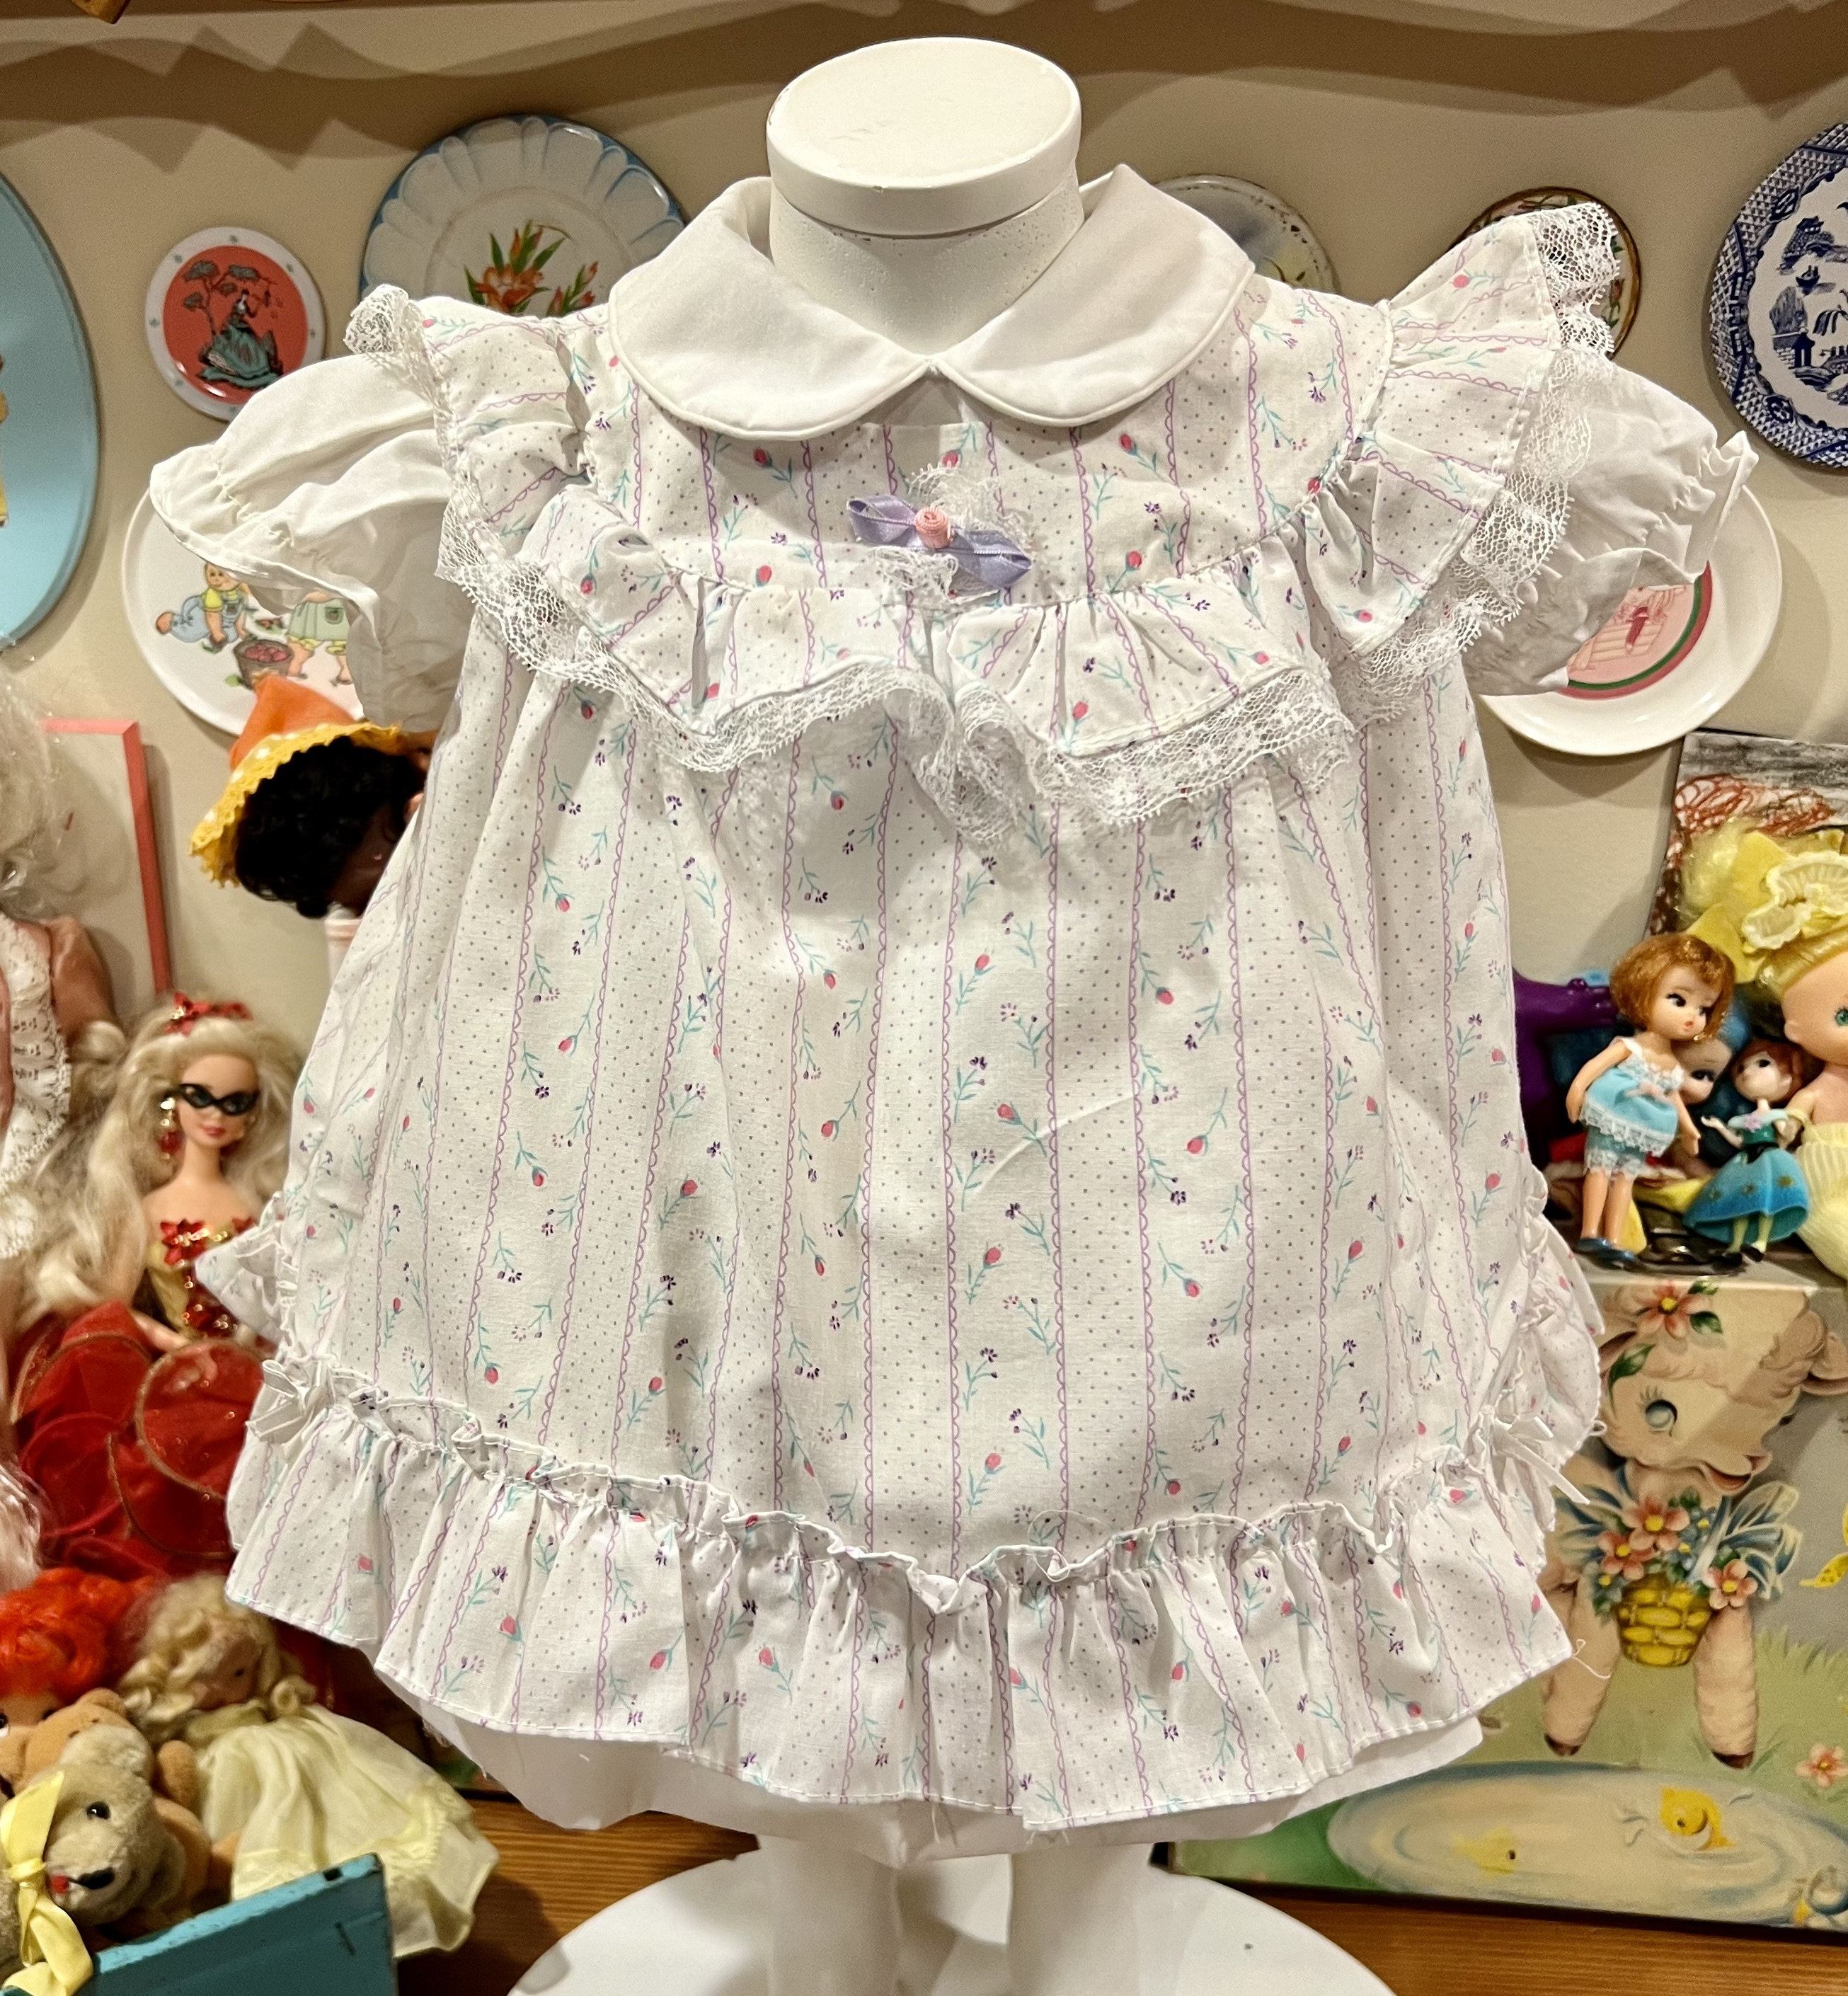 Vintage Aprons, Retro Aprons, Old Fashioned Aprons & Patterns 9-12 Months Mayfair Baby Dress $15.00 AT vintagedancer.com